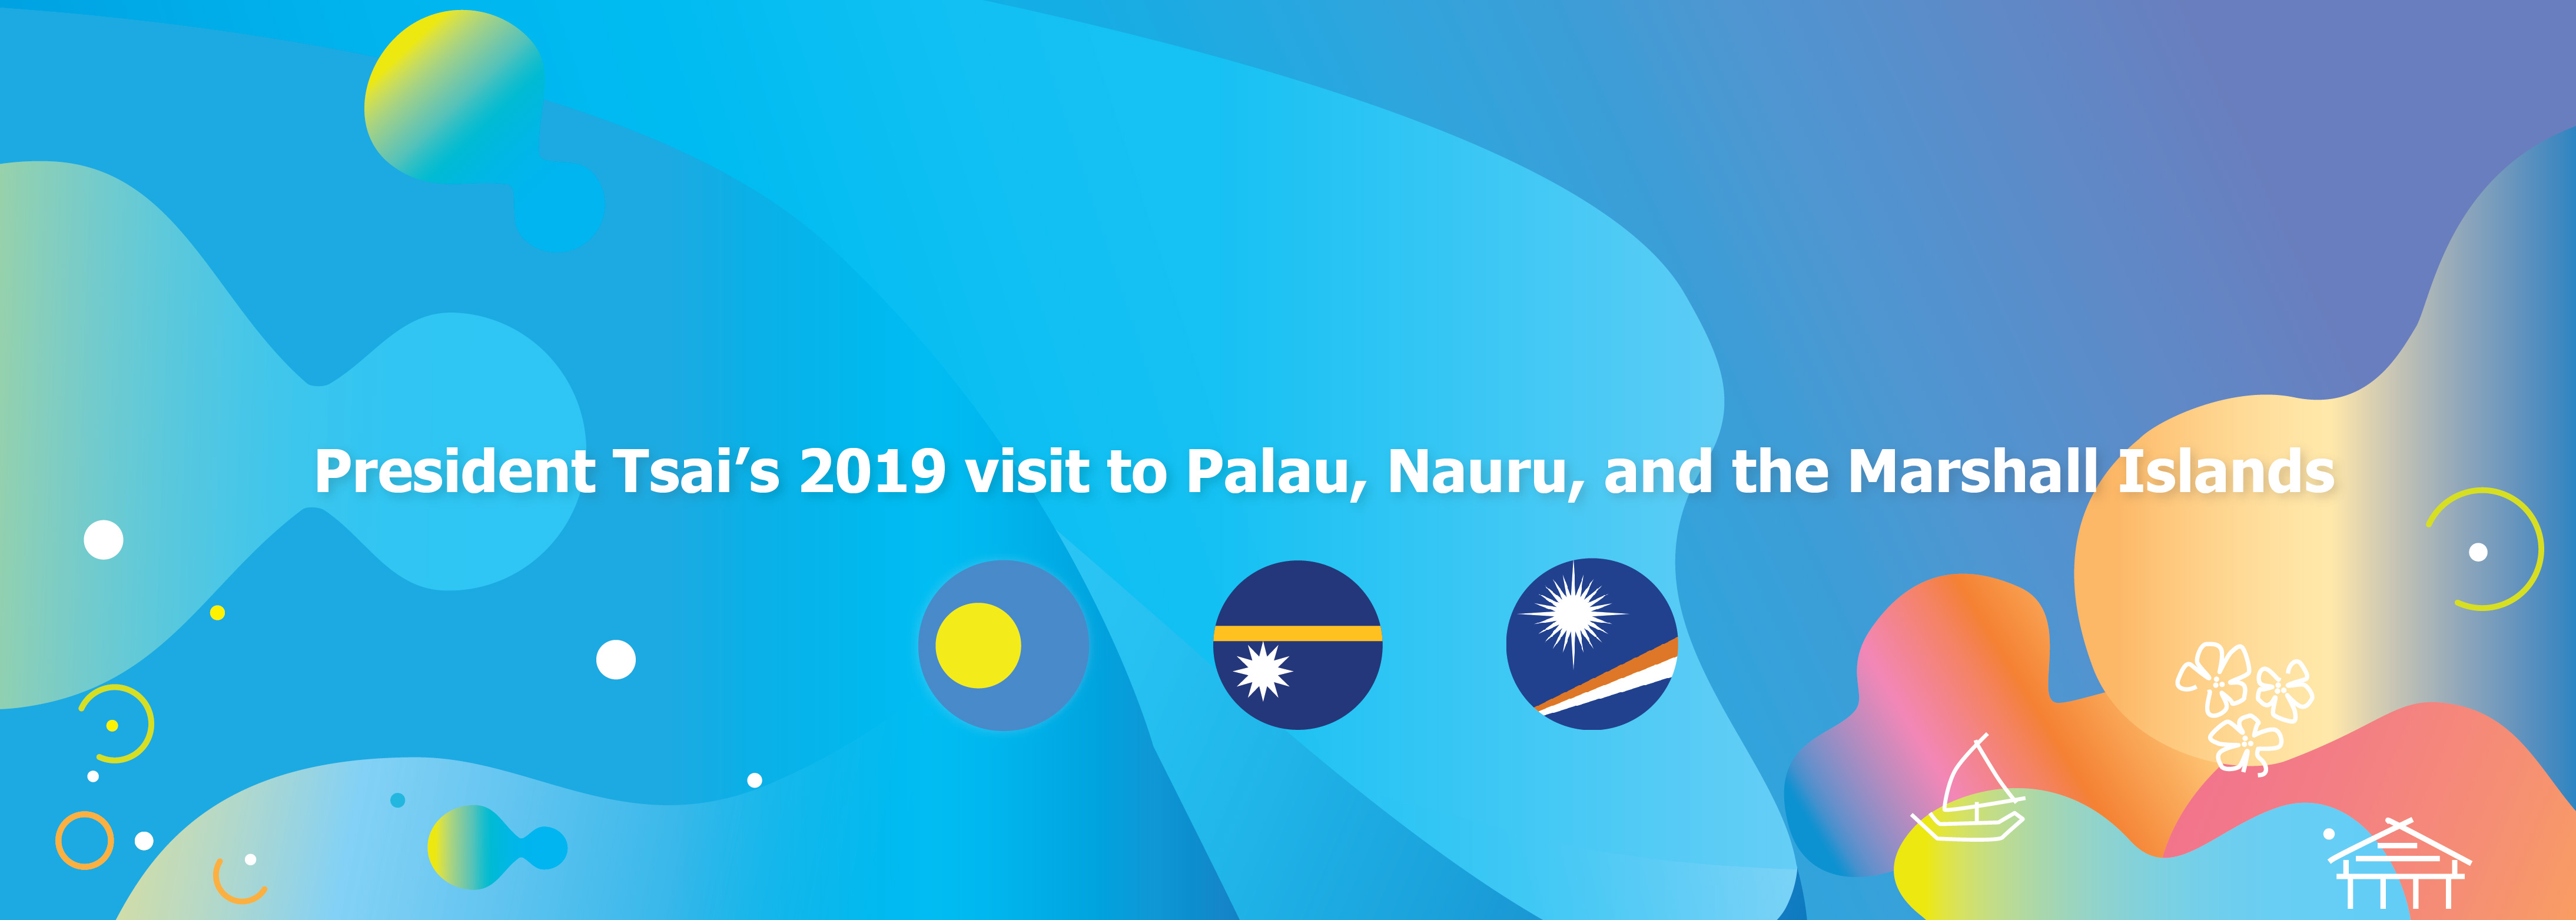 President Tsai's 2019 visit to Palau, Nauru, and the Marshall Islands